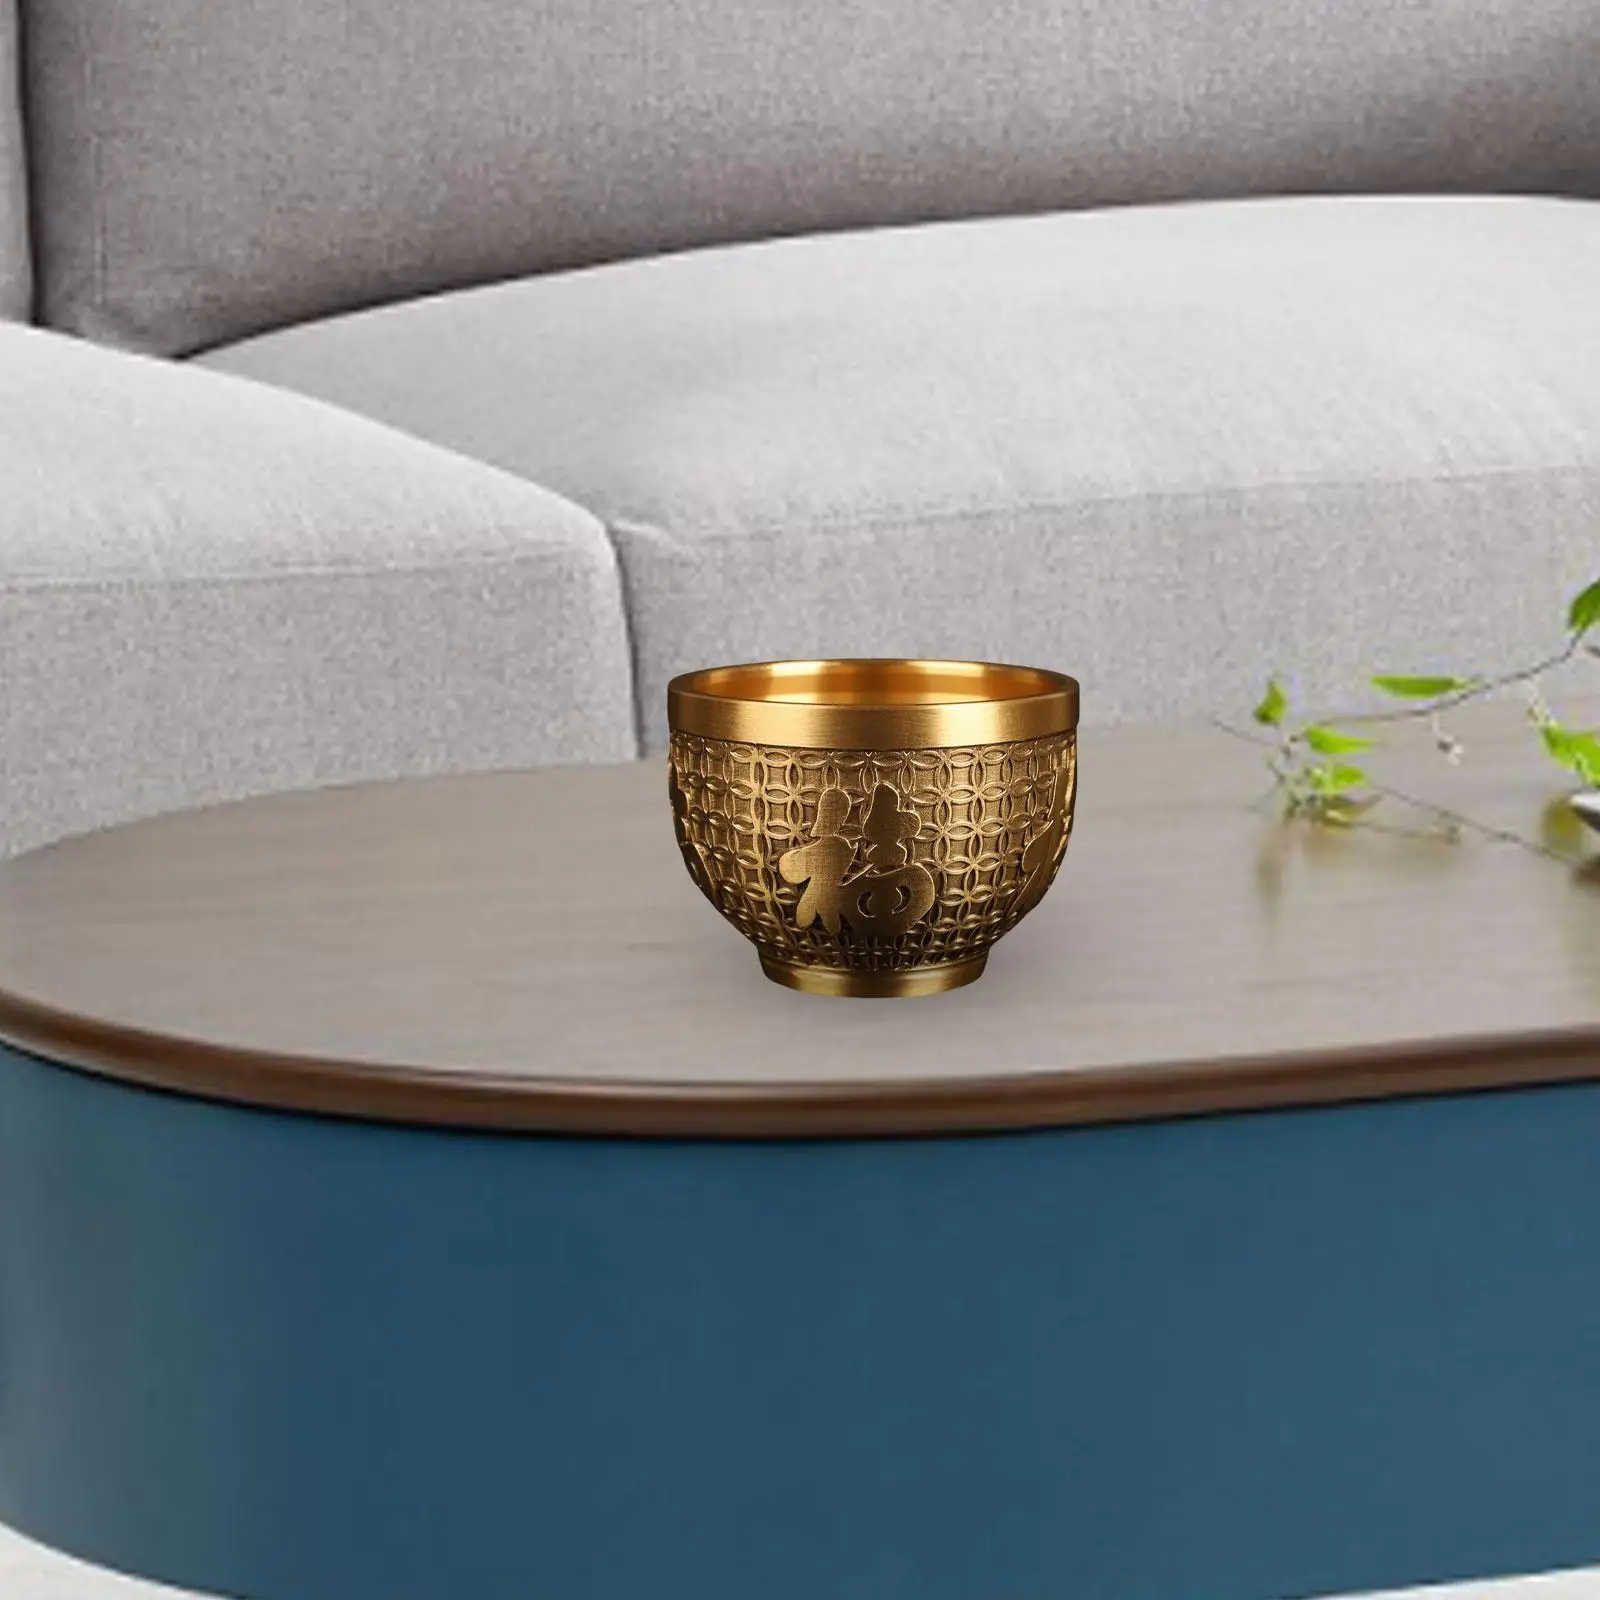 Brass Fu Bowl, Desktop Decor Carvingsculpture Decorative Good Luck Rice Cylinder